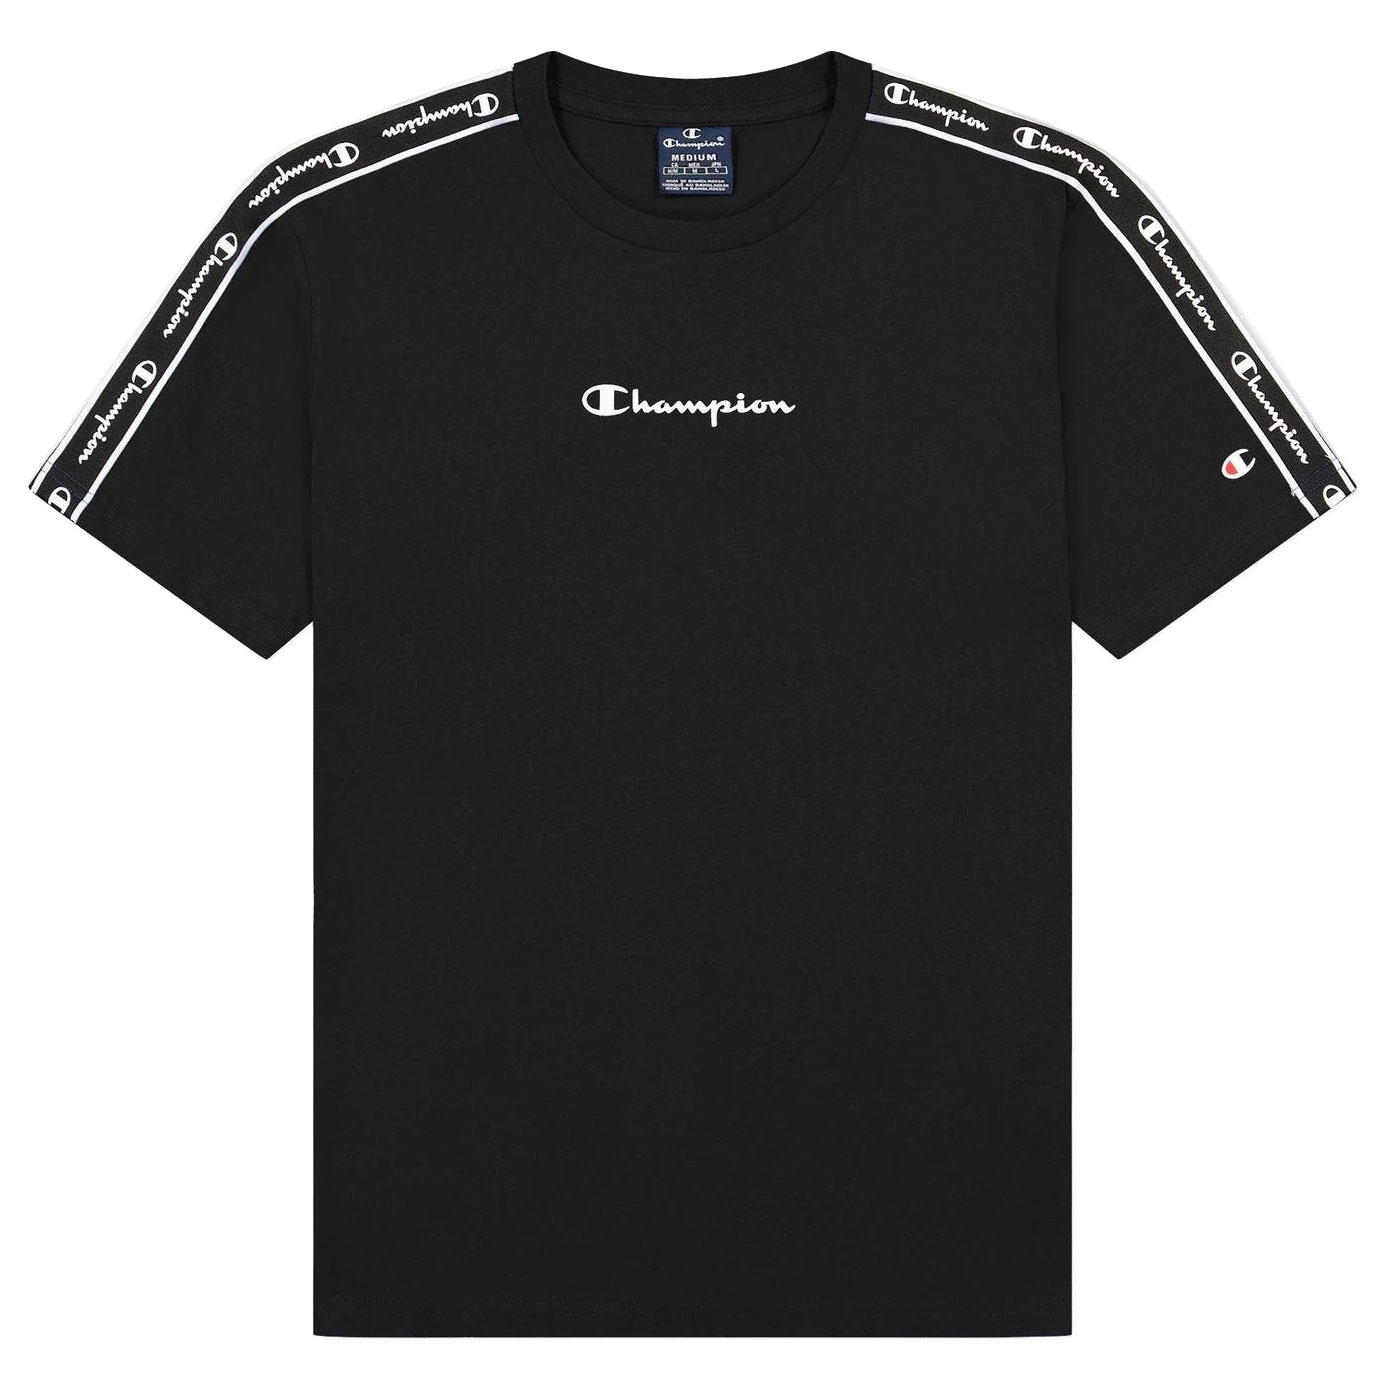 Productfoto van Champion Legacy Crewneck T-Shirt 217834 - black beauty